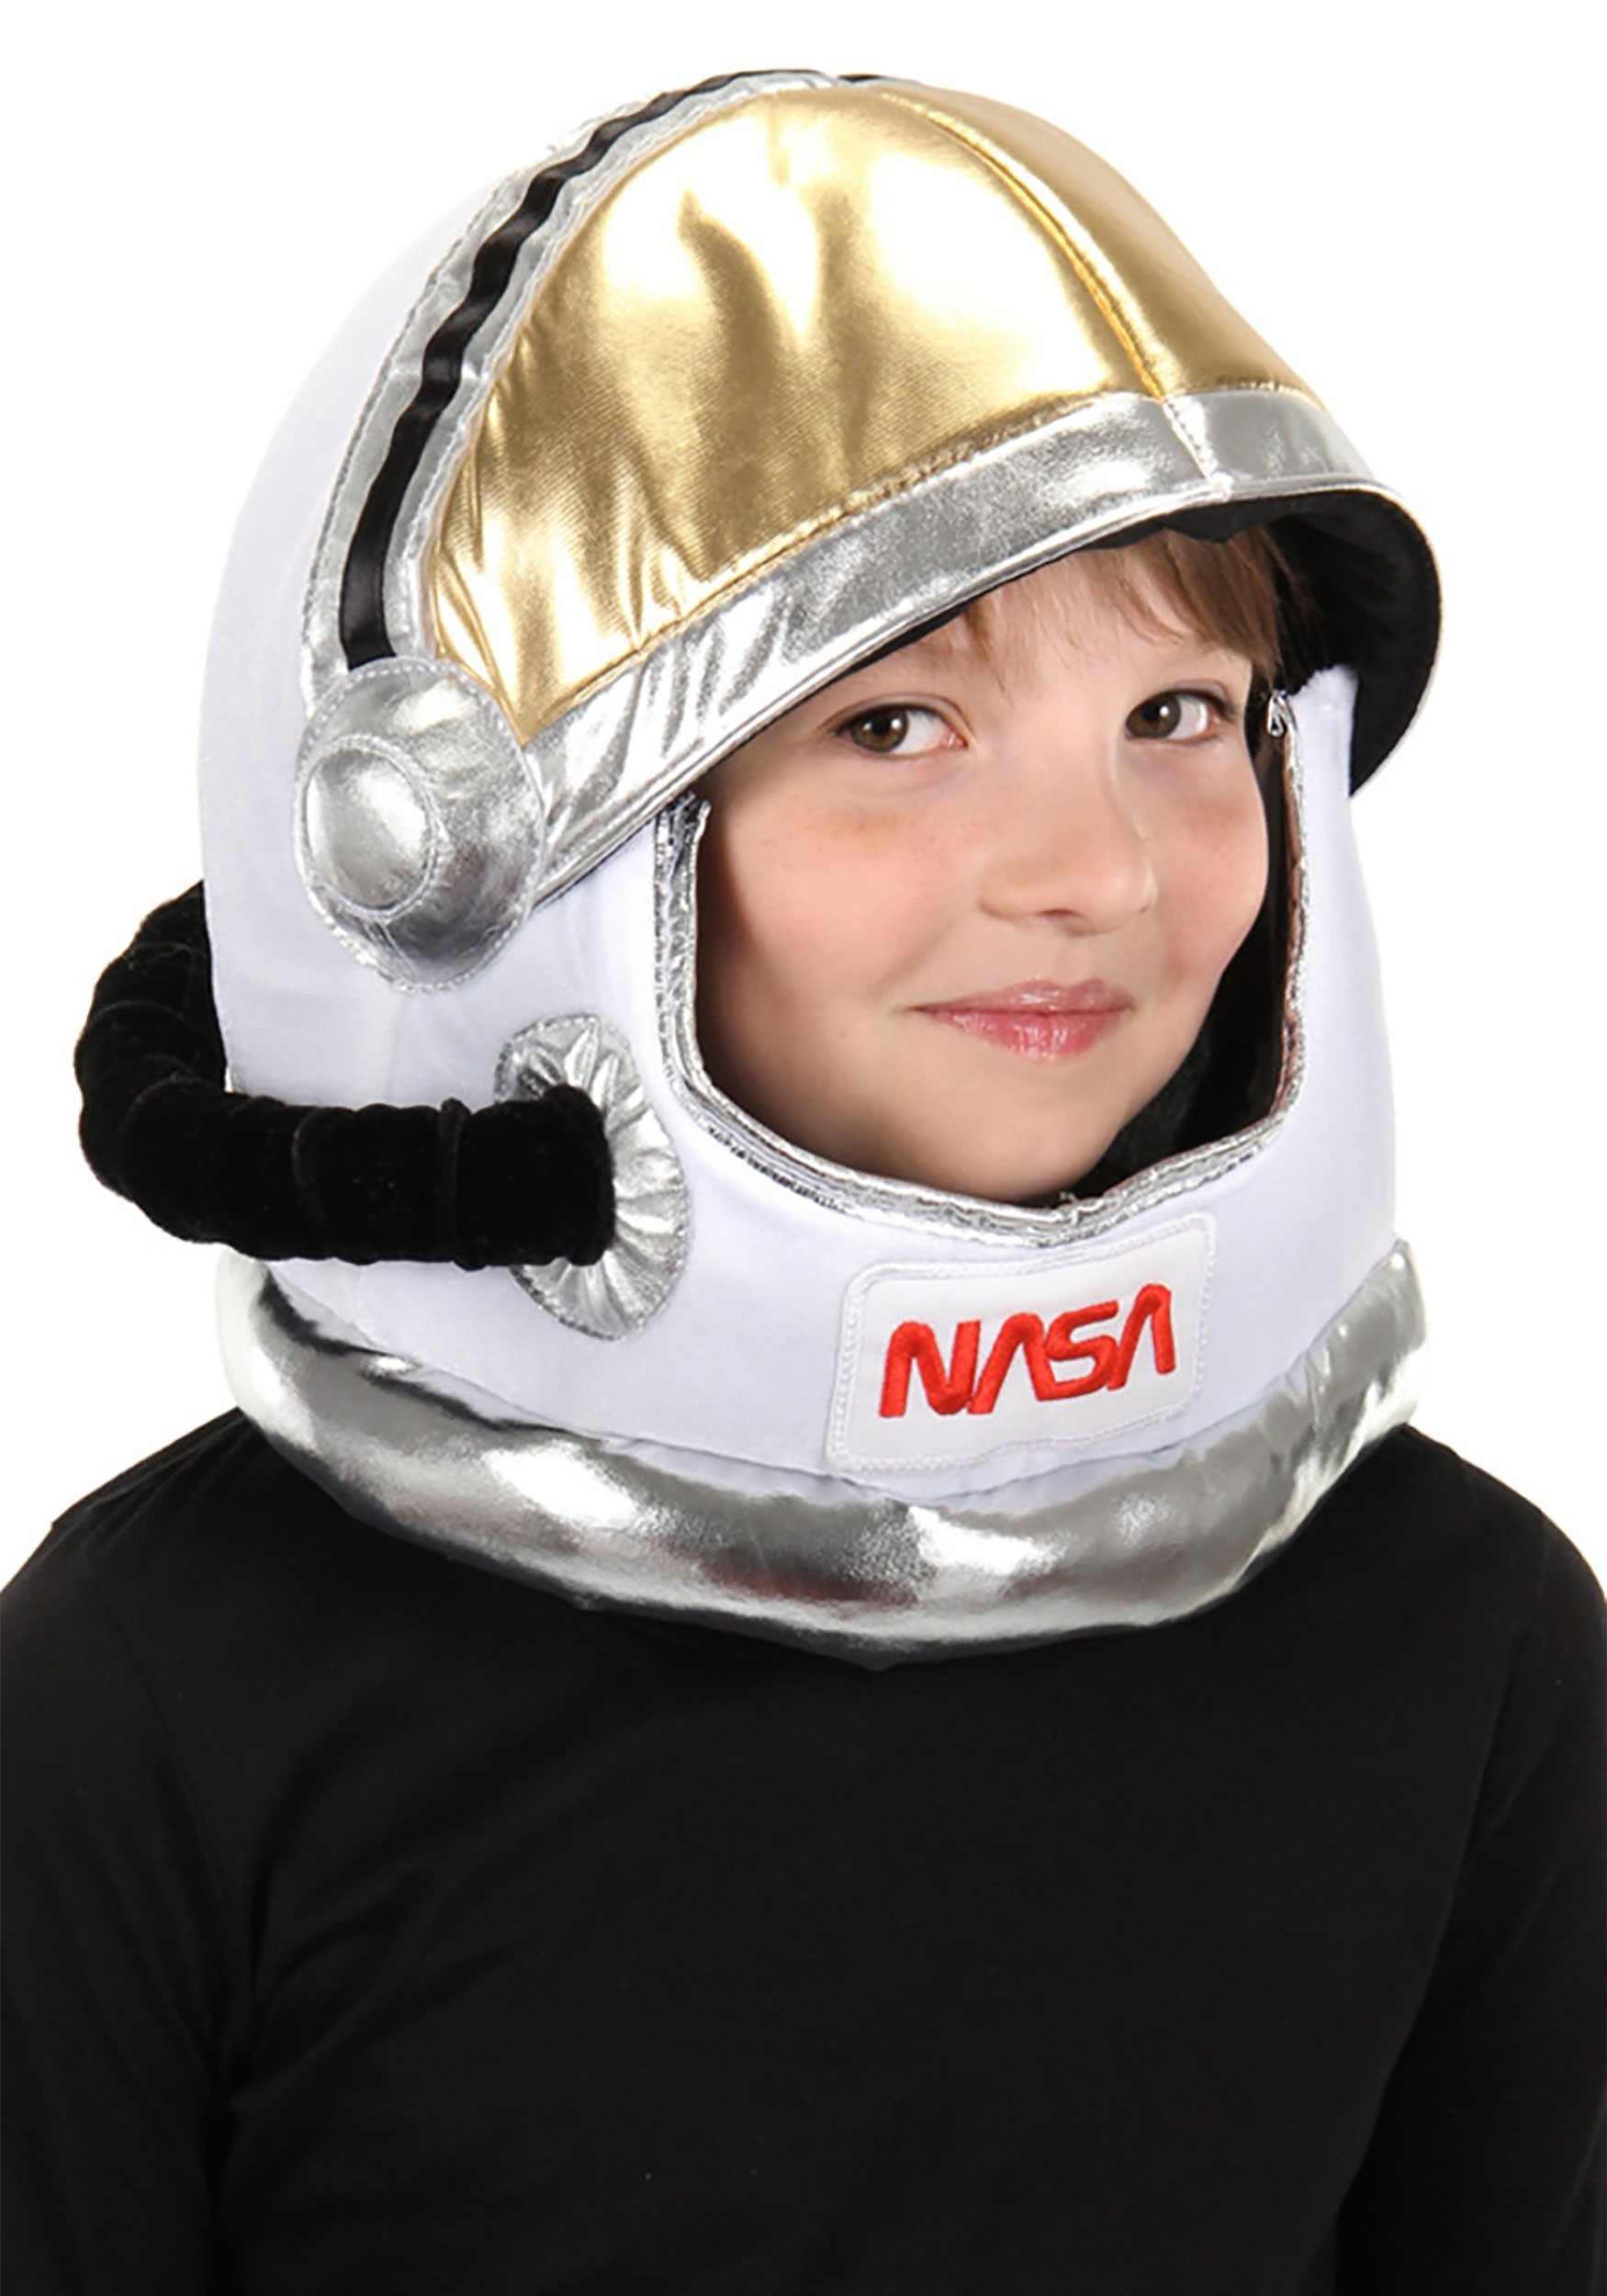 Шлем ко дню космонавтики. Шлем Космонавта. Шлем скафандра. Шлем скафандра Космонавта. Шлем Космонавта детский.